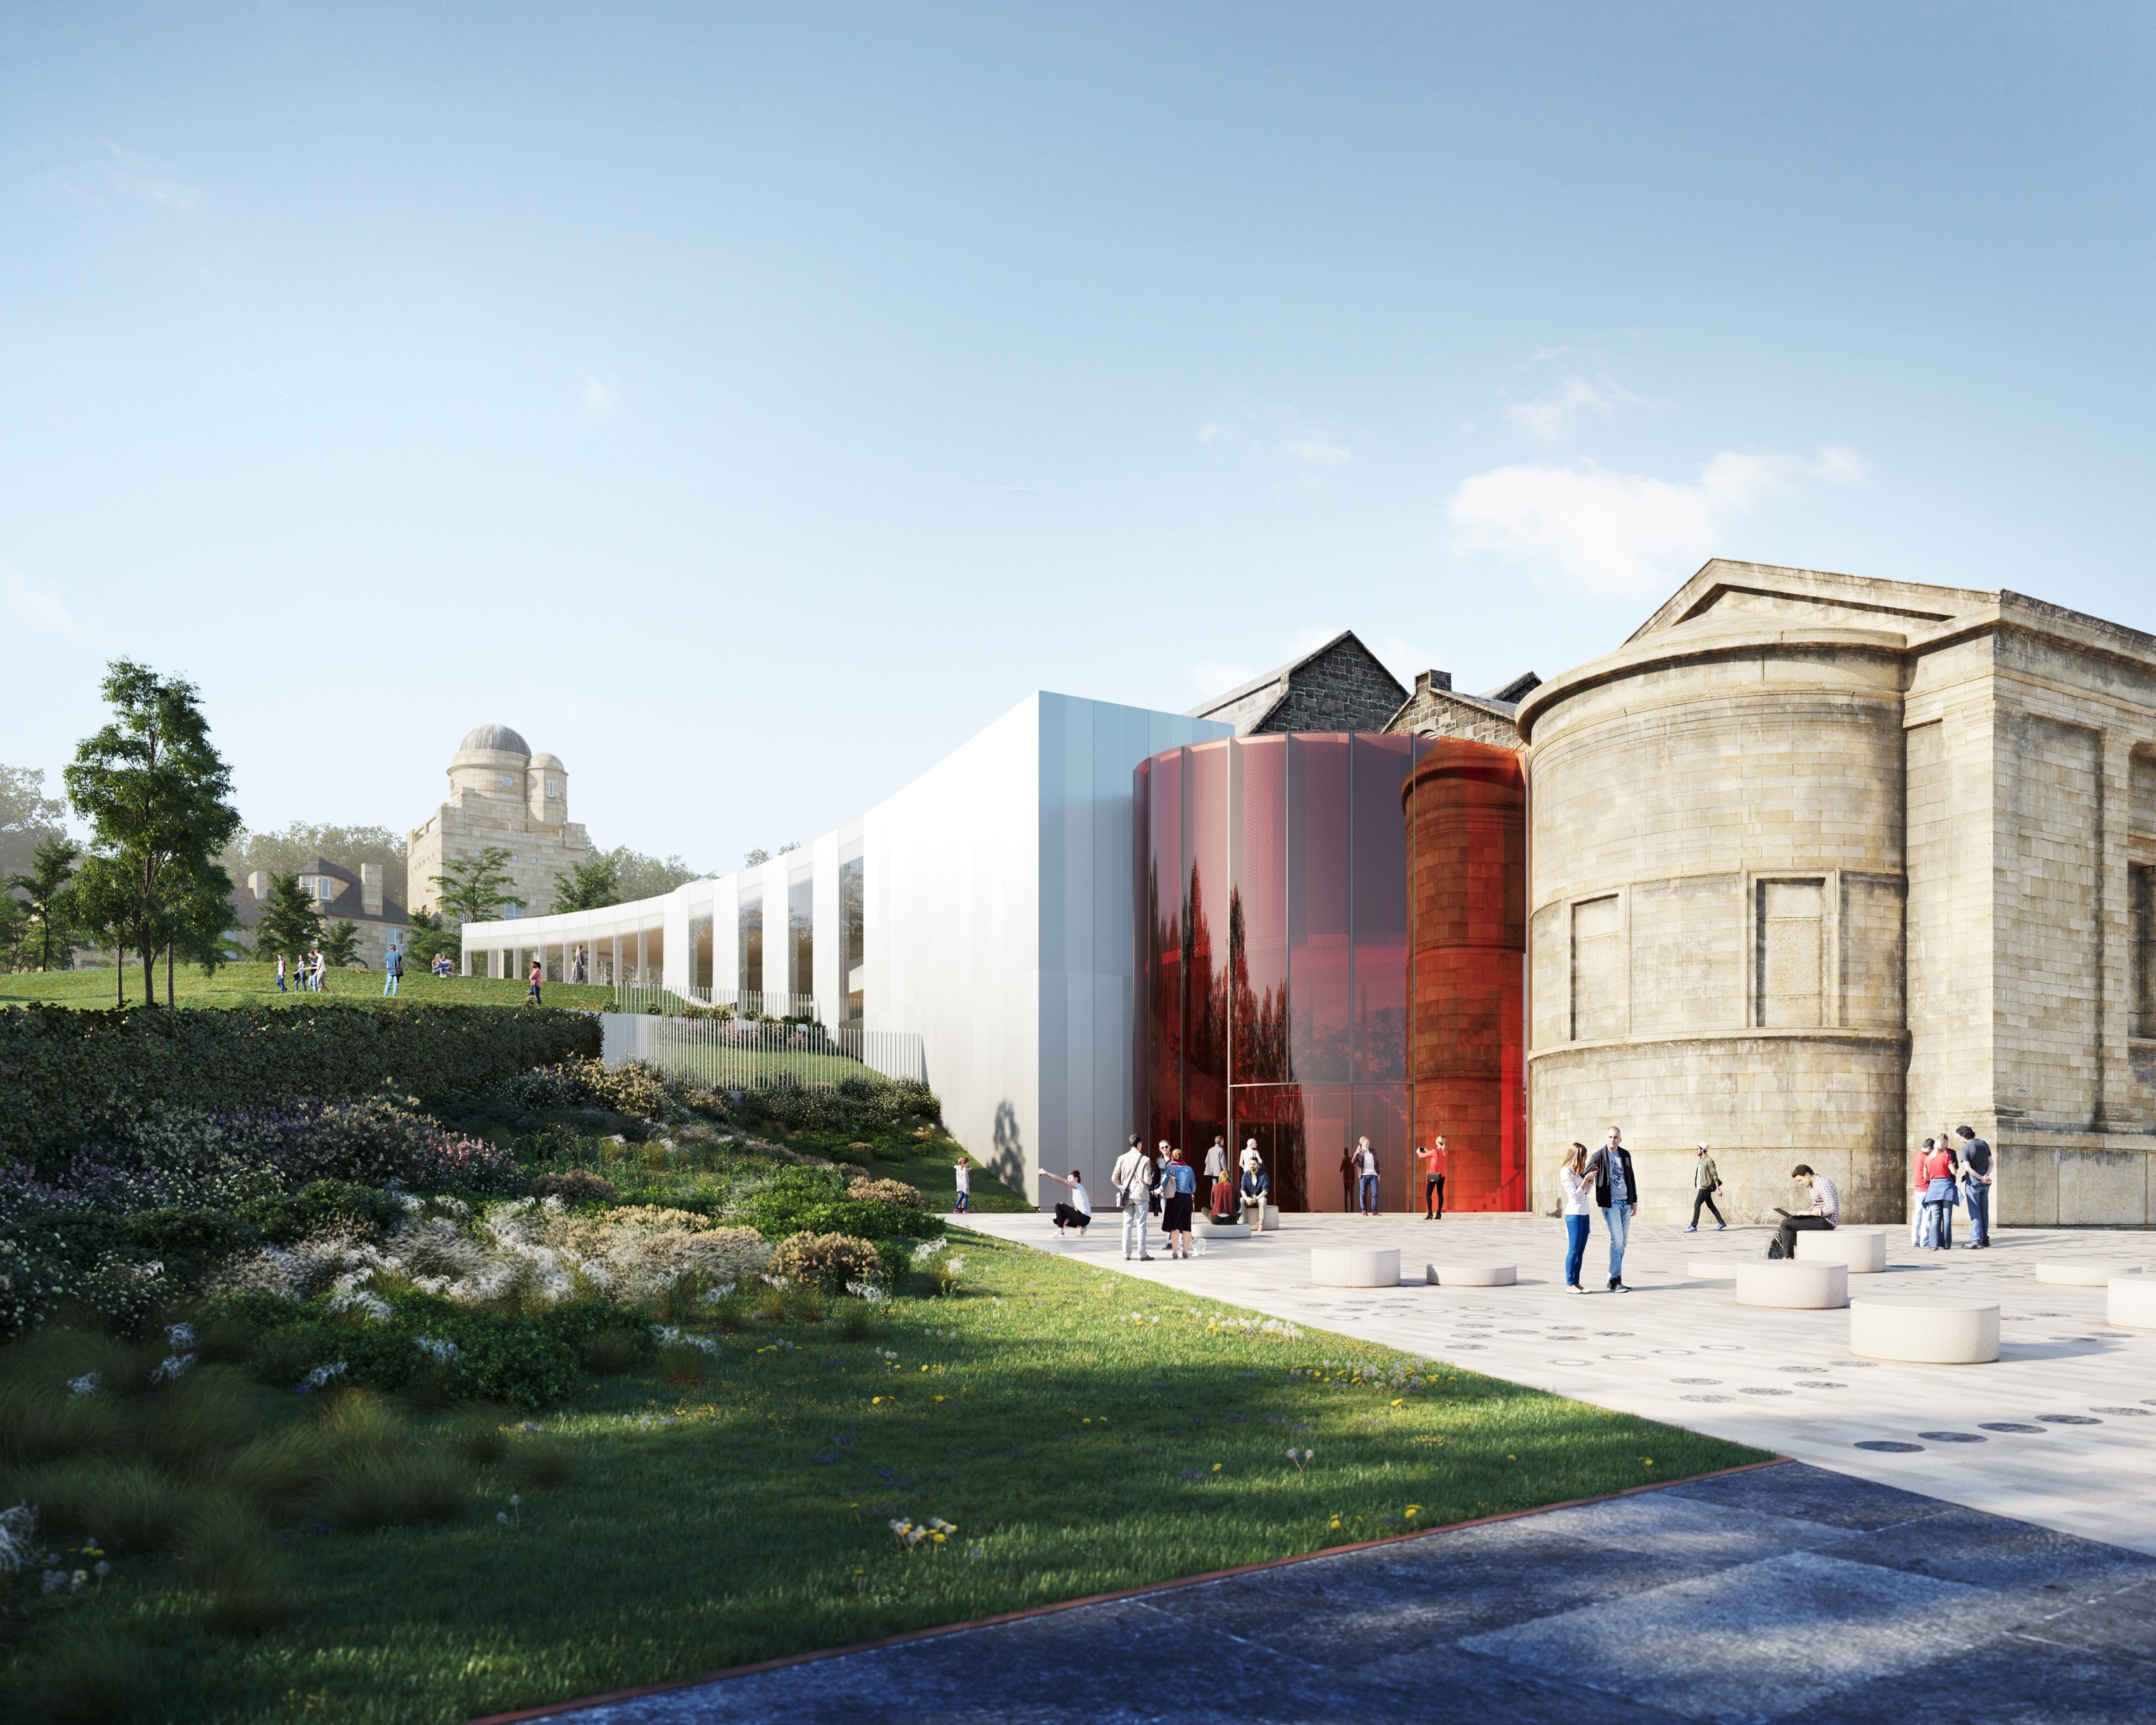 AL_A Paisley Museum - External Design extension and garden